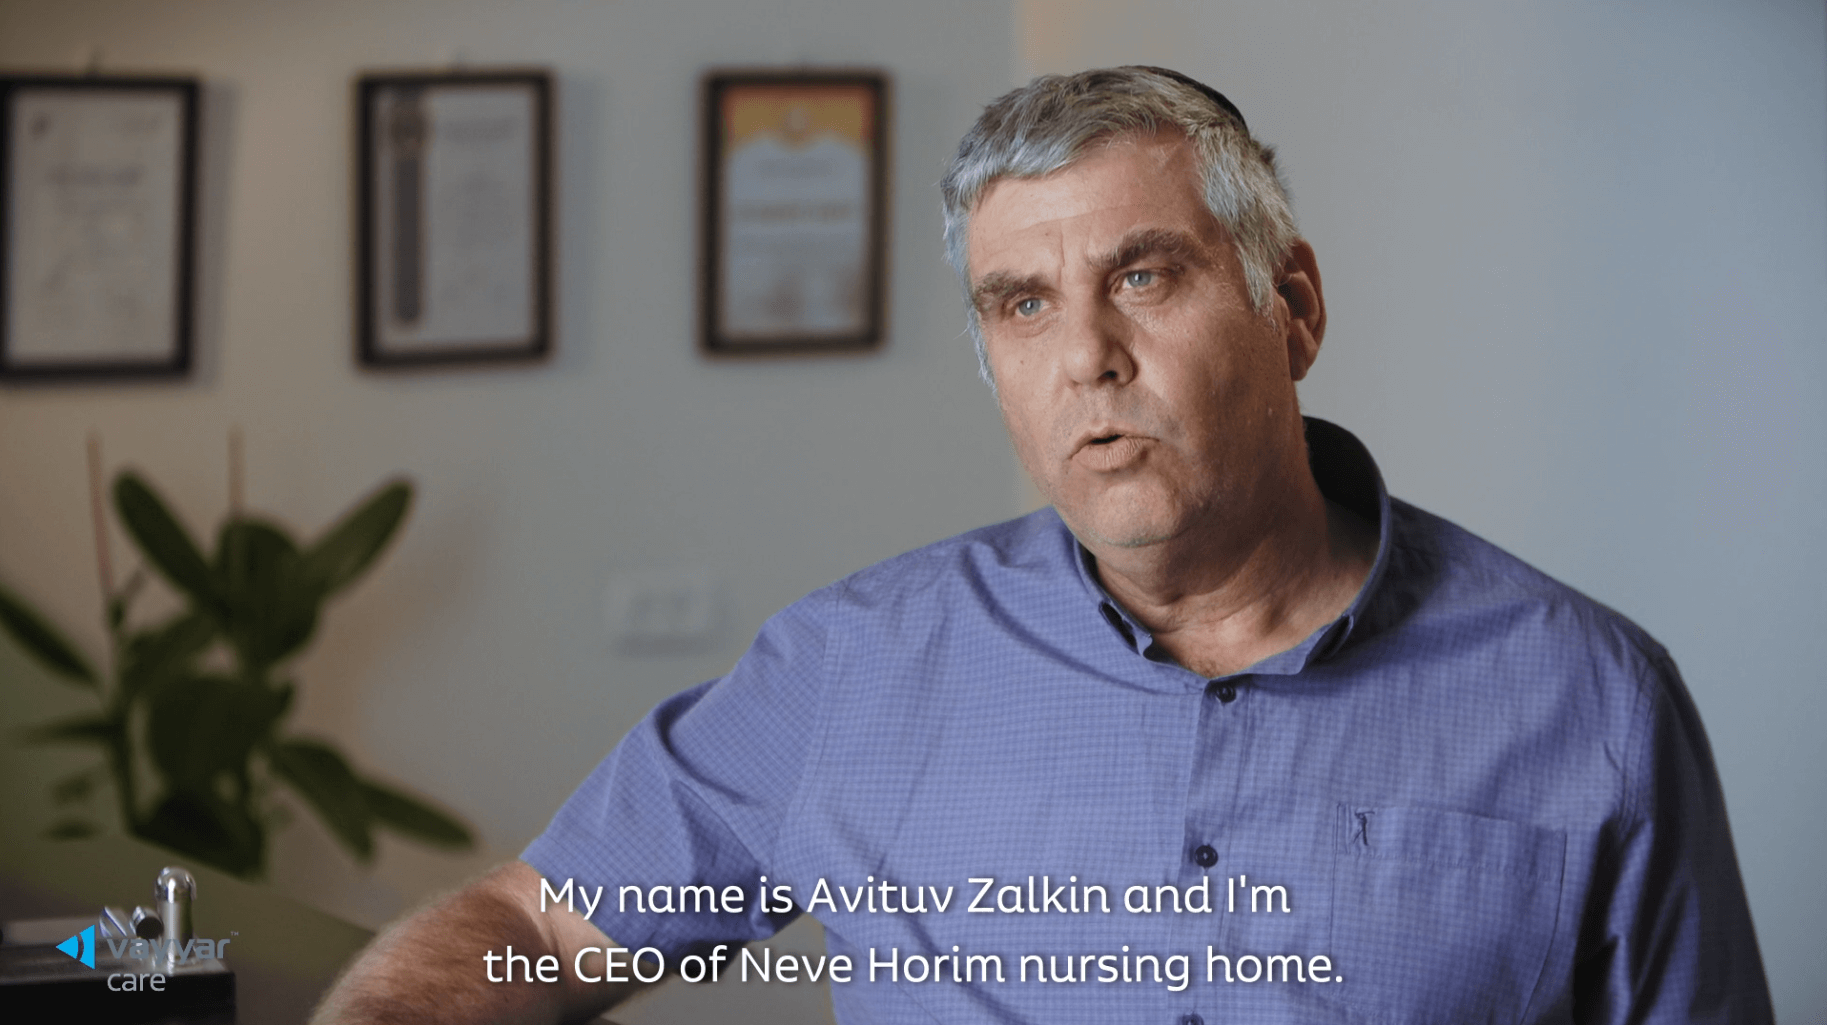 My name is Avituv Zalkin and I'm the CEO of Neve Horim nursing home.